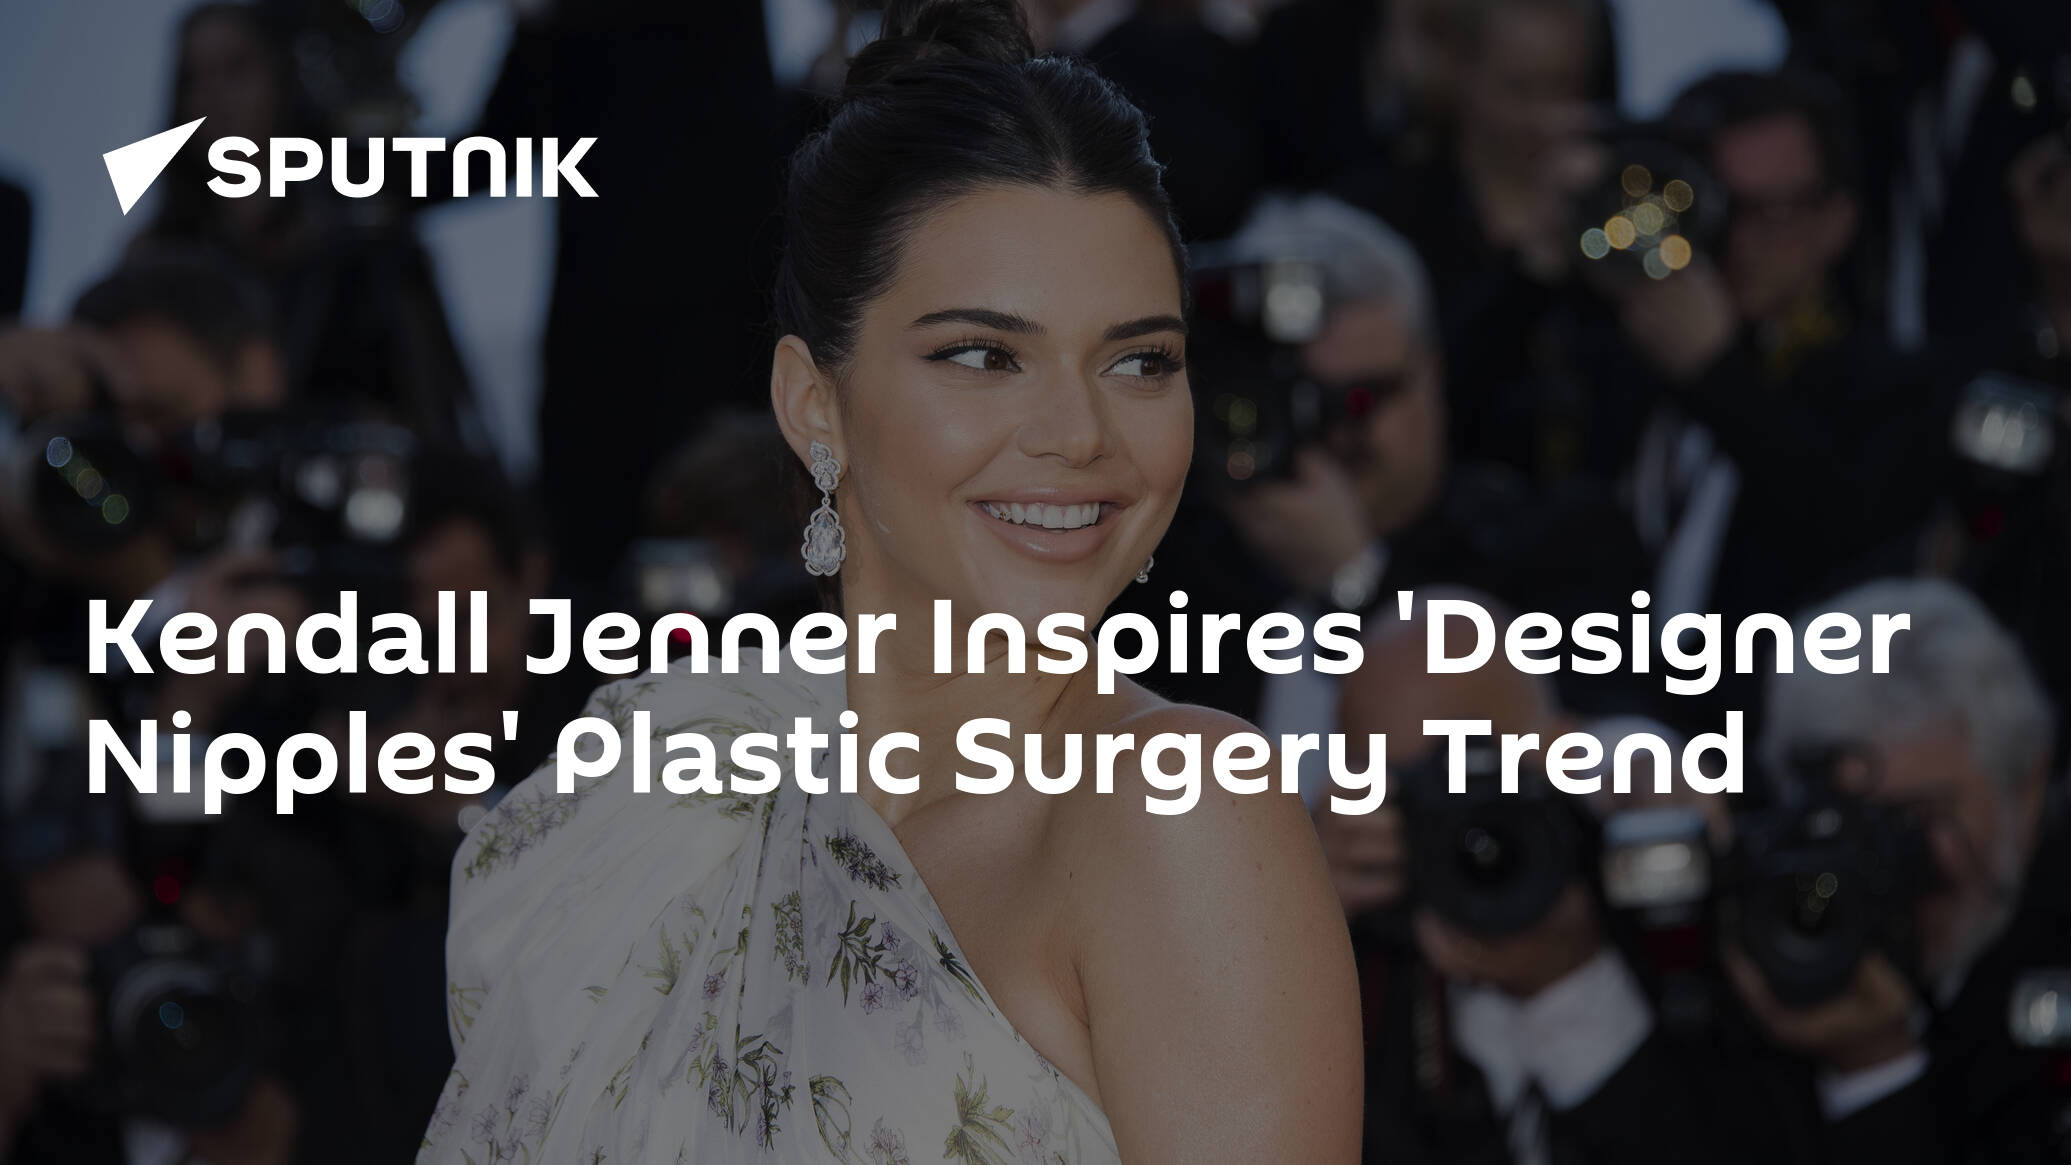 Kendall Jenner Inspires 'Designer Nipples' Plastic Surgery Trend -  18.04.2018, Sputnik International